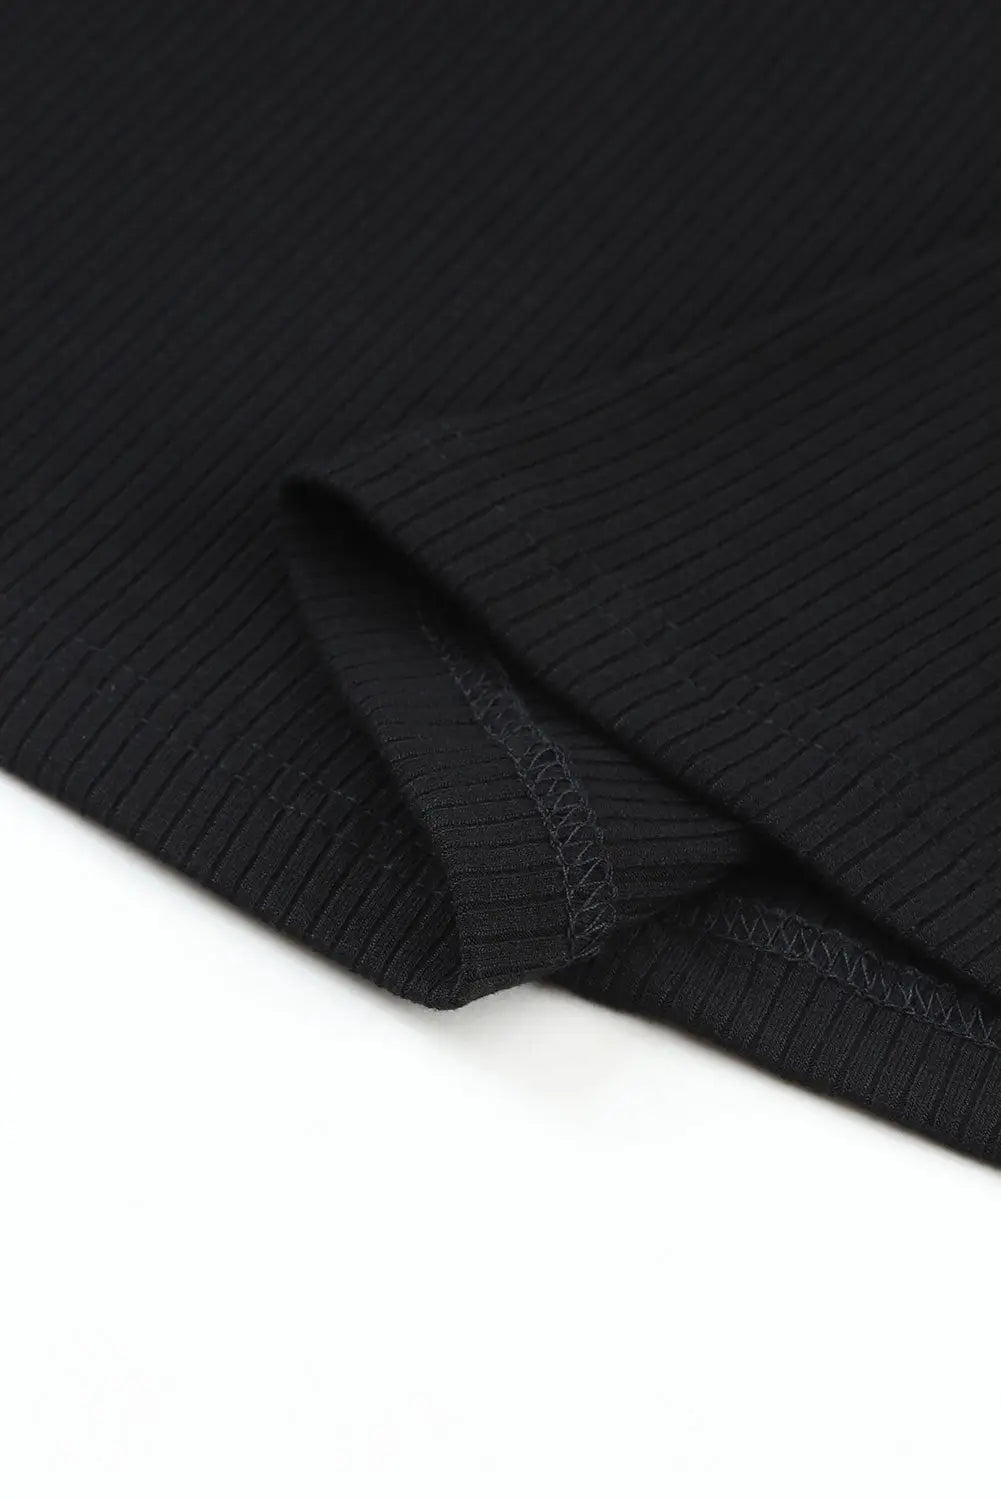 Black striped mesh long sleeve crewneck ribbed top - tops